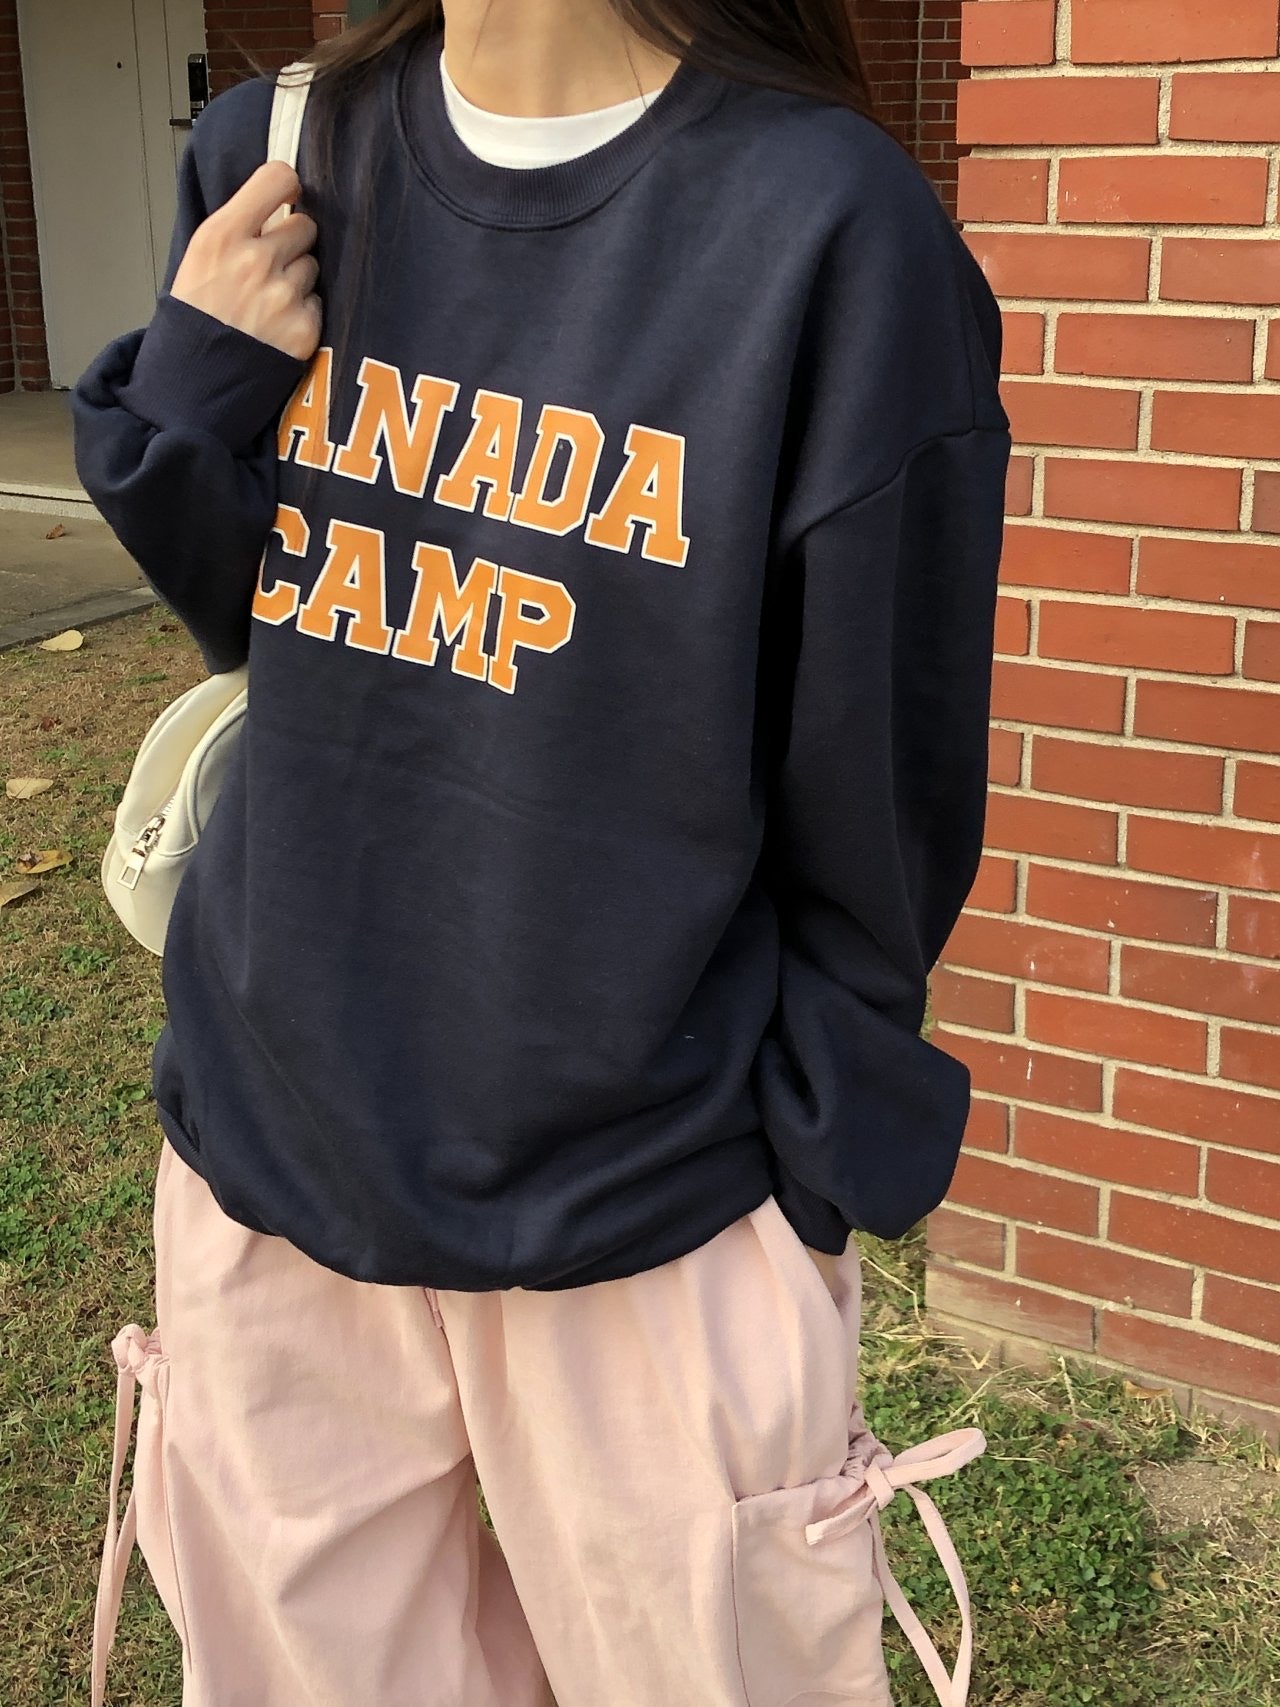 Canada Camp Sweatshirt